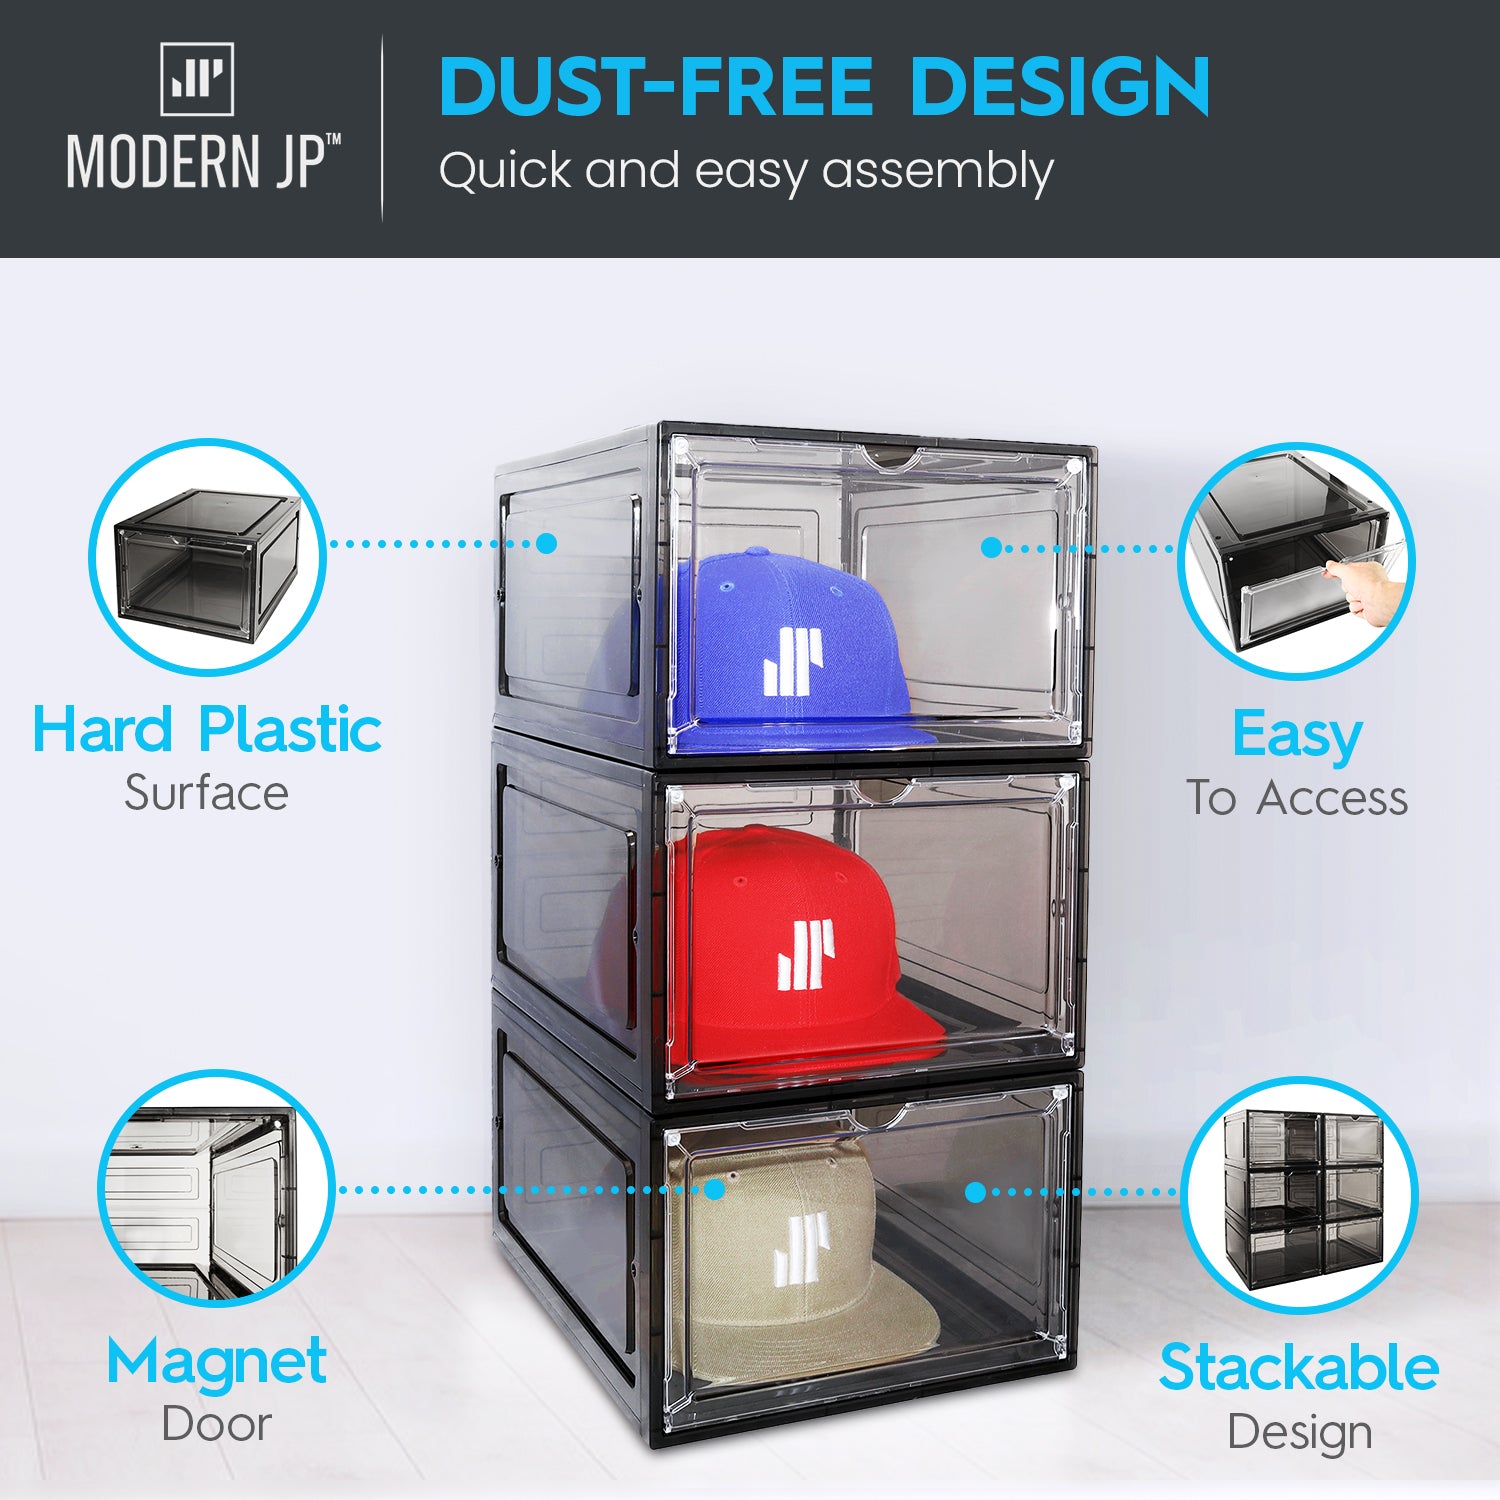 Buy 2 Pcs Hat Shaper Insert Baseball Cap Storage Box Desk Top Organizer  Shelf Lids Hats Neto Online